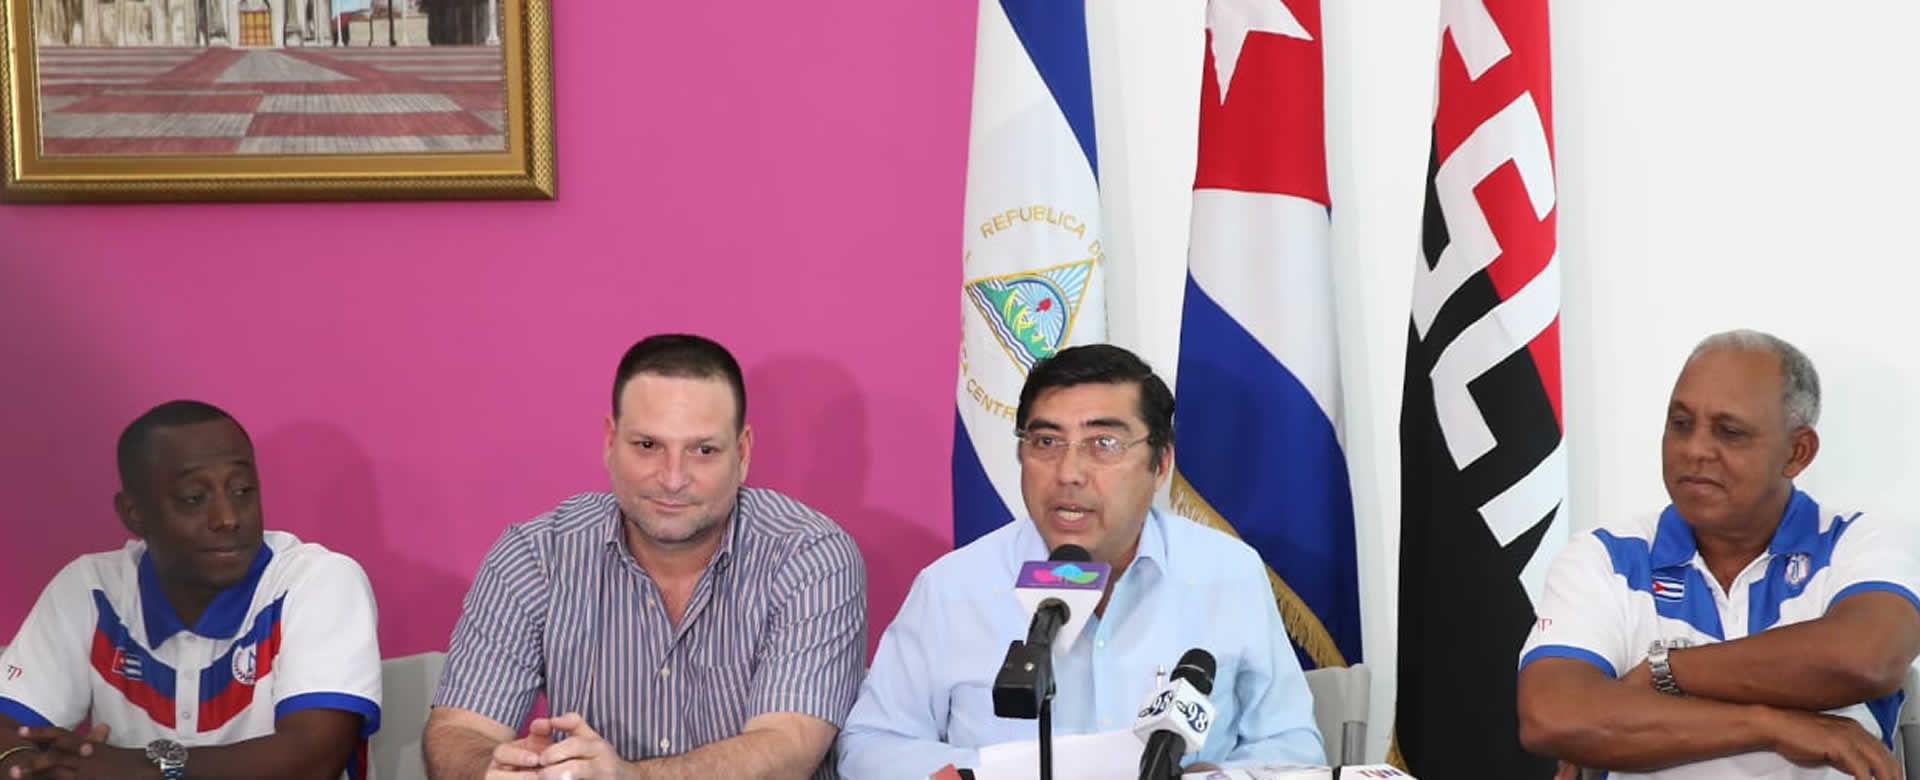 Selección cubana llega a Nicaragua para la Serie Internacional de Béisbol